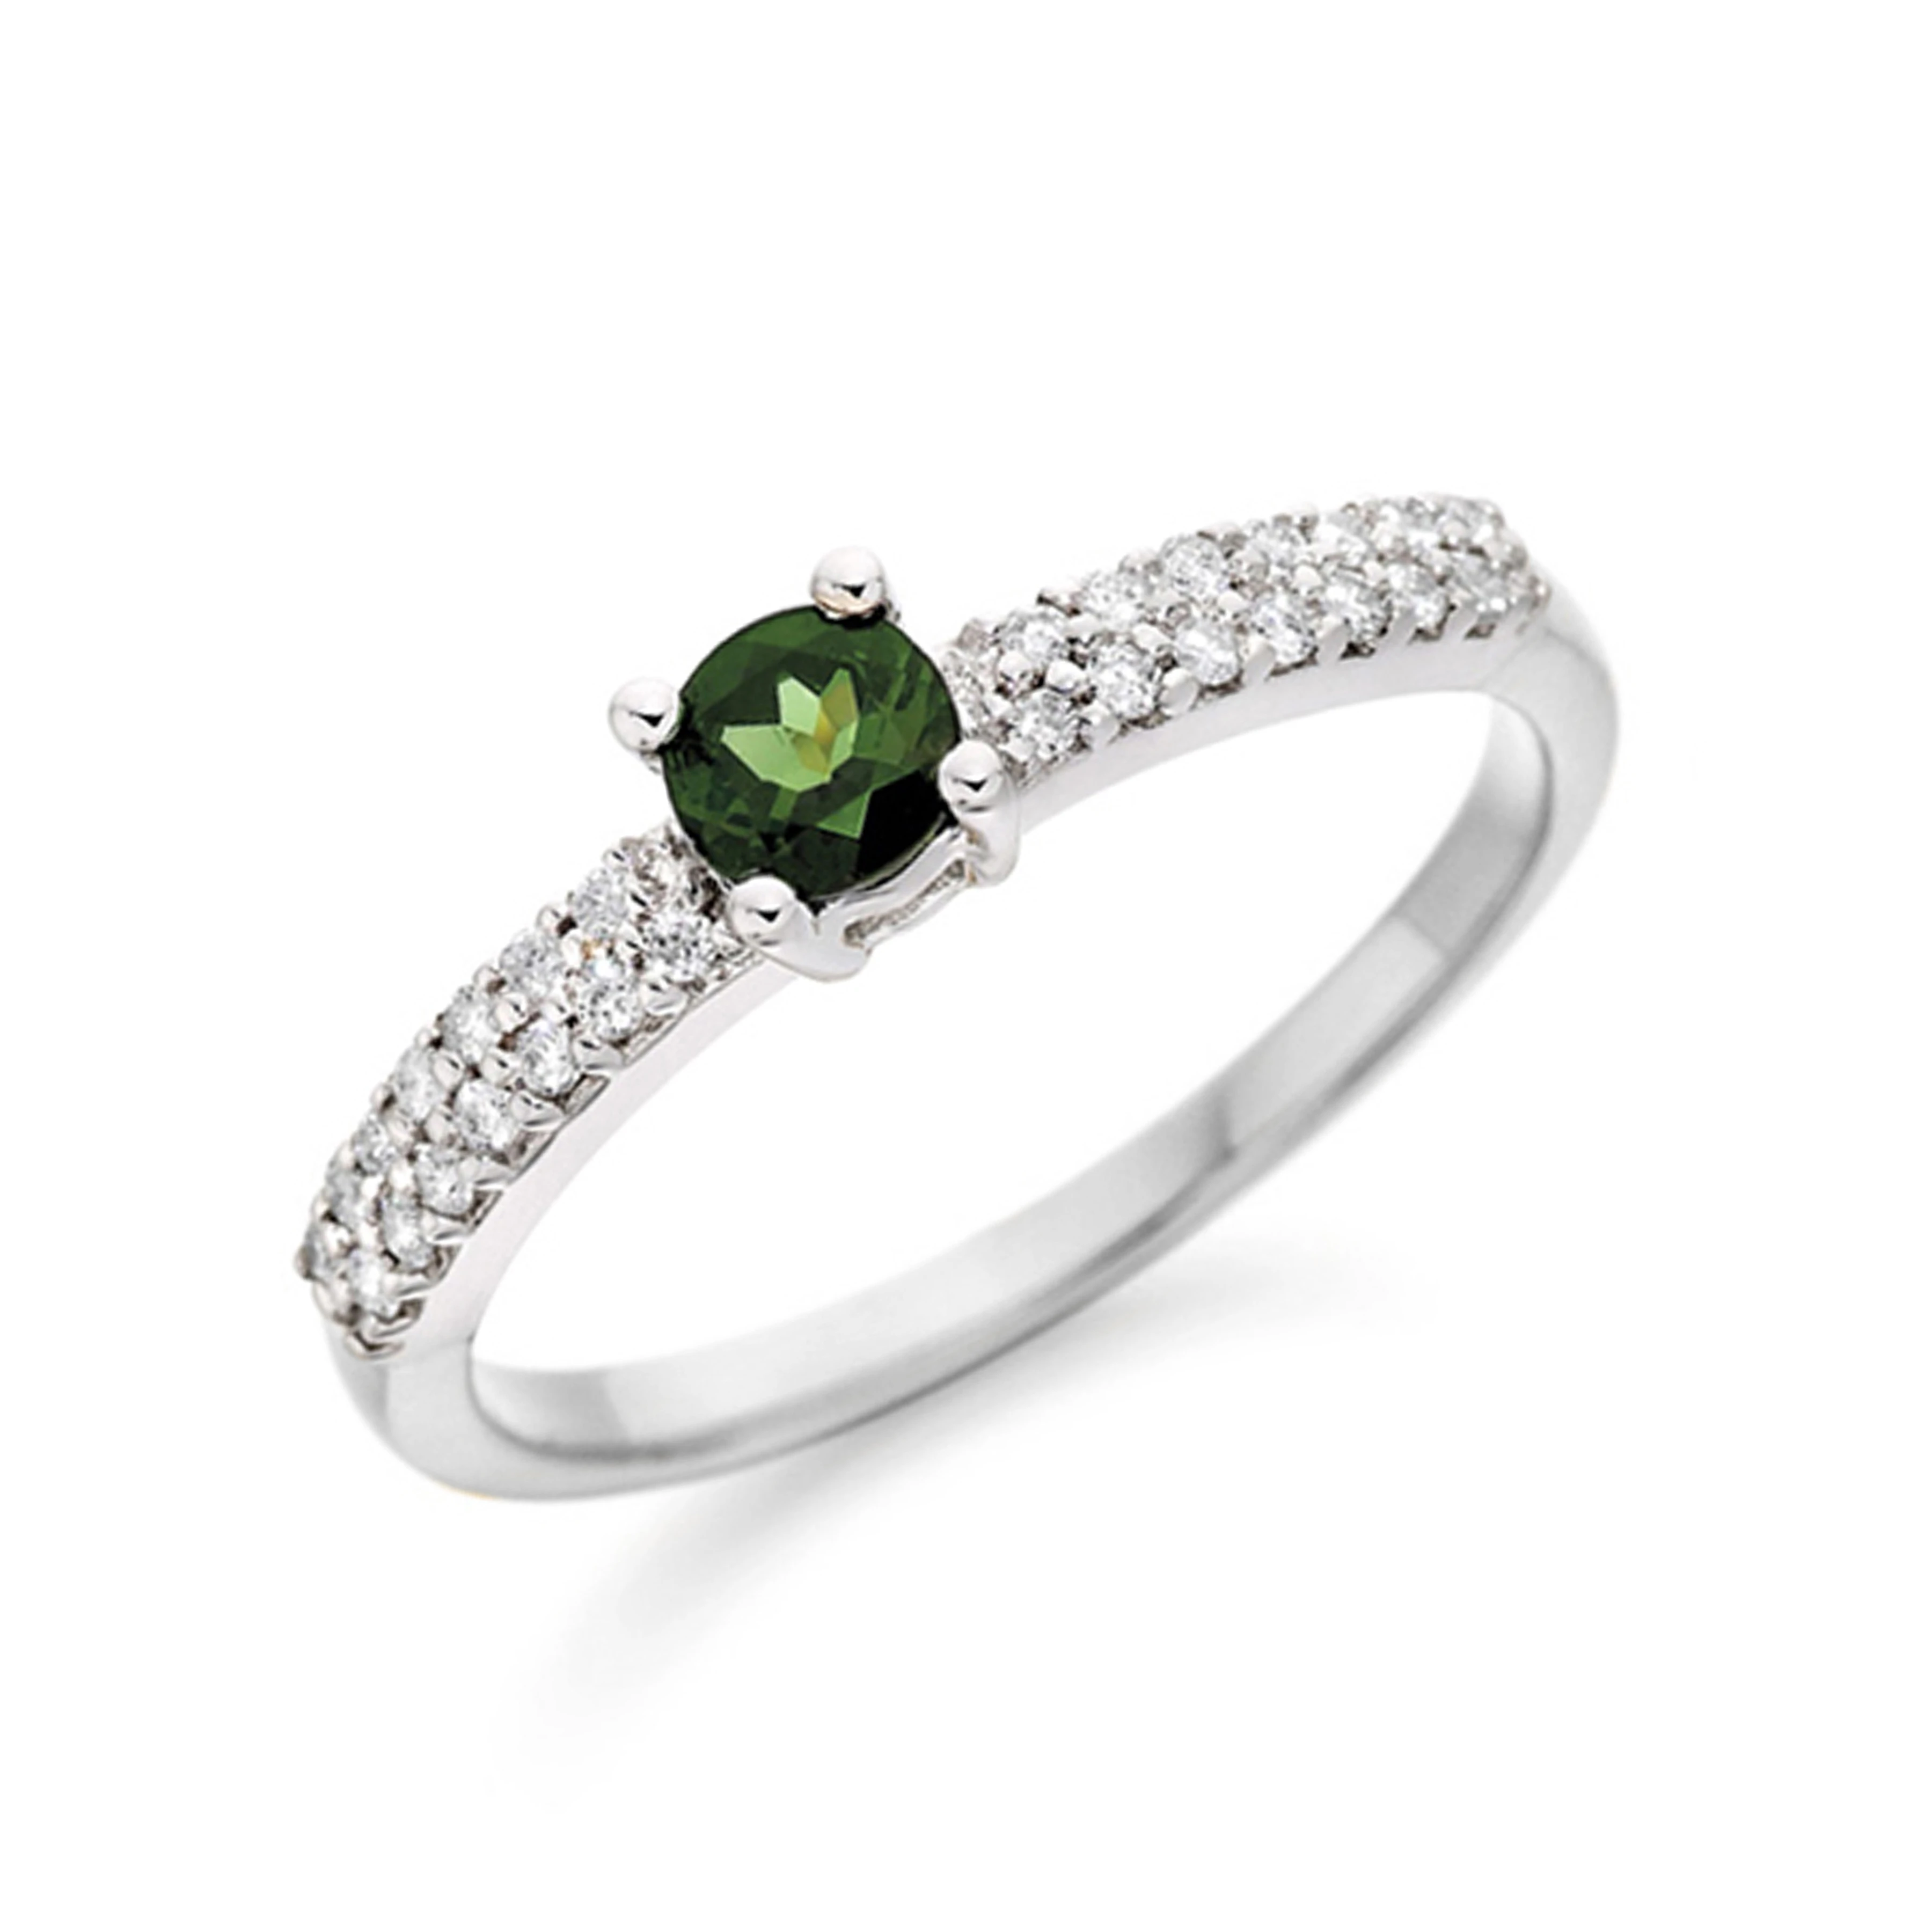 5mm Round Green Tourmaline Stones On Shoulder Diamond And Gemstone Engagement Ring